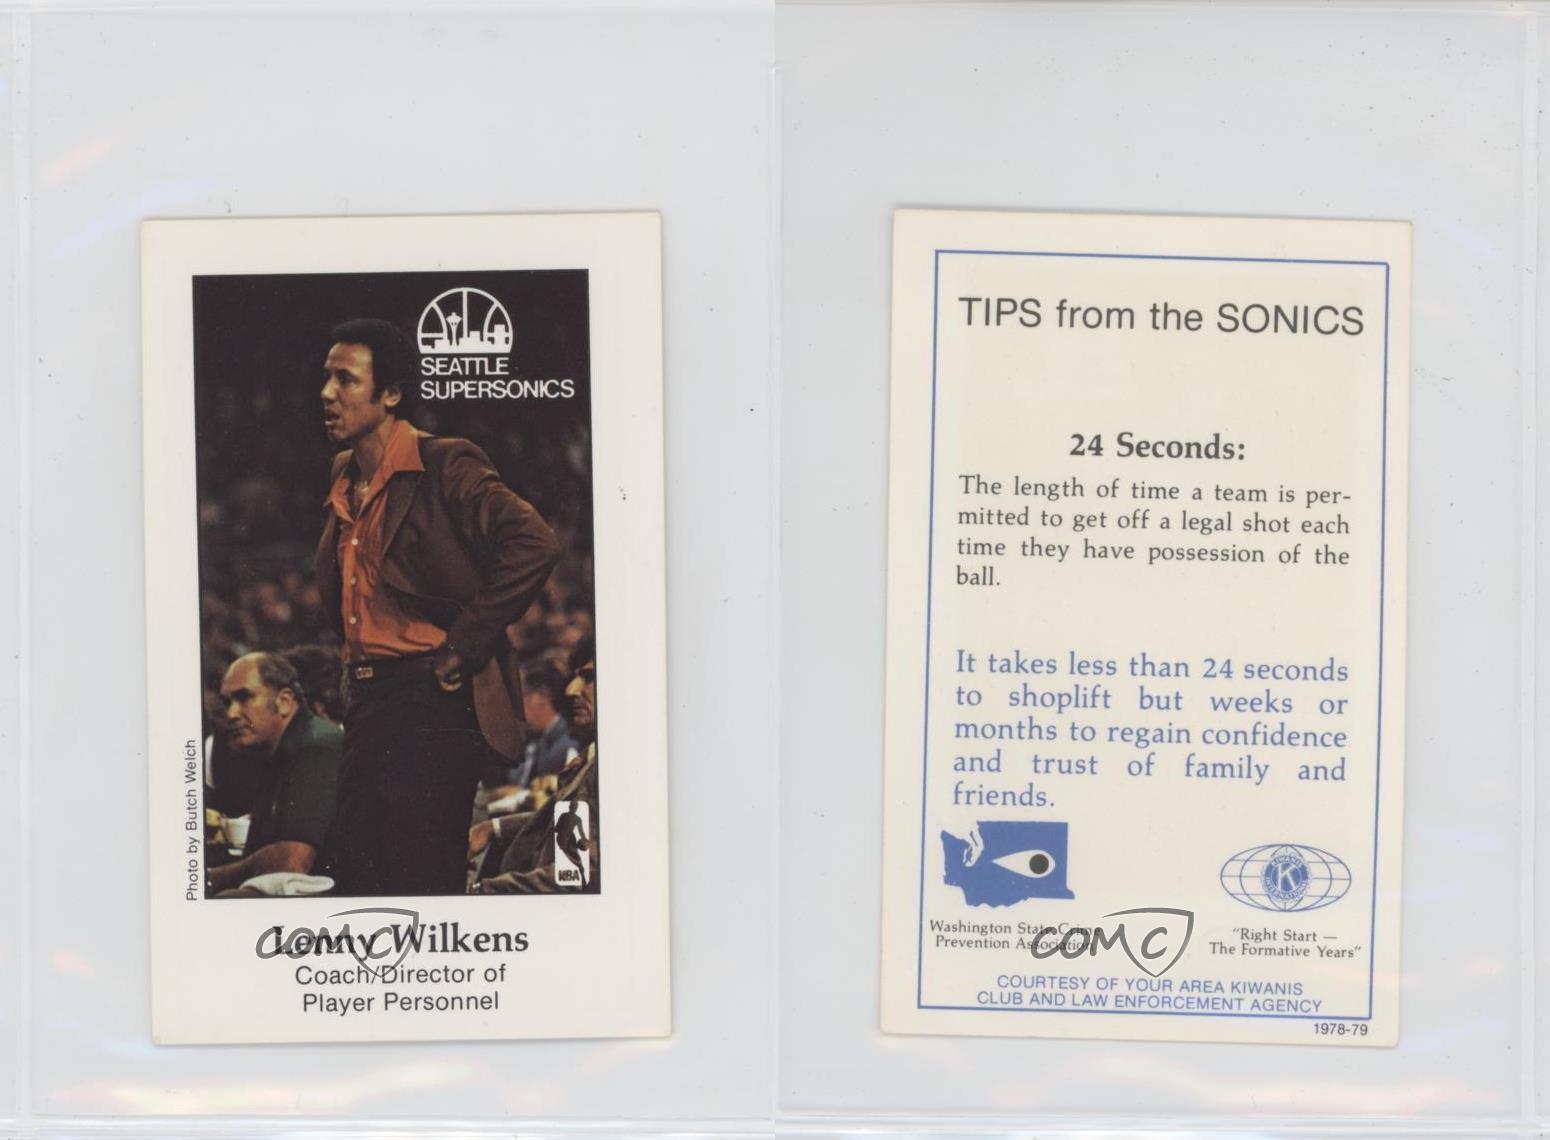 Swi$h - 54. 1978-79 Seattle Supersonics Coach: Lenny Wilkens